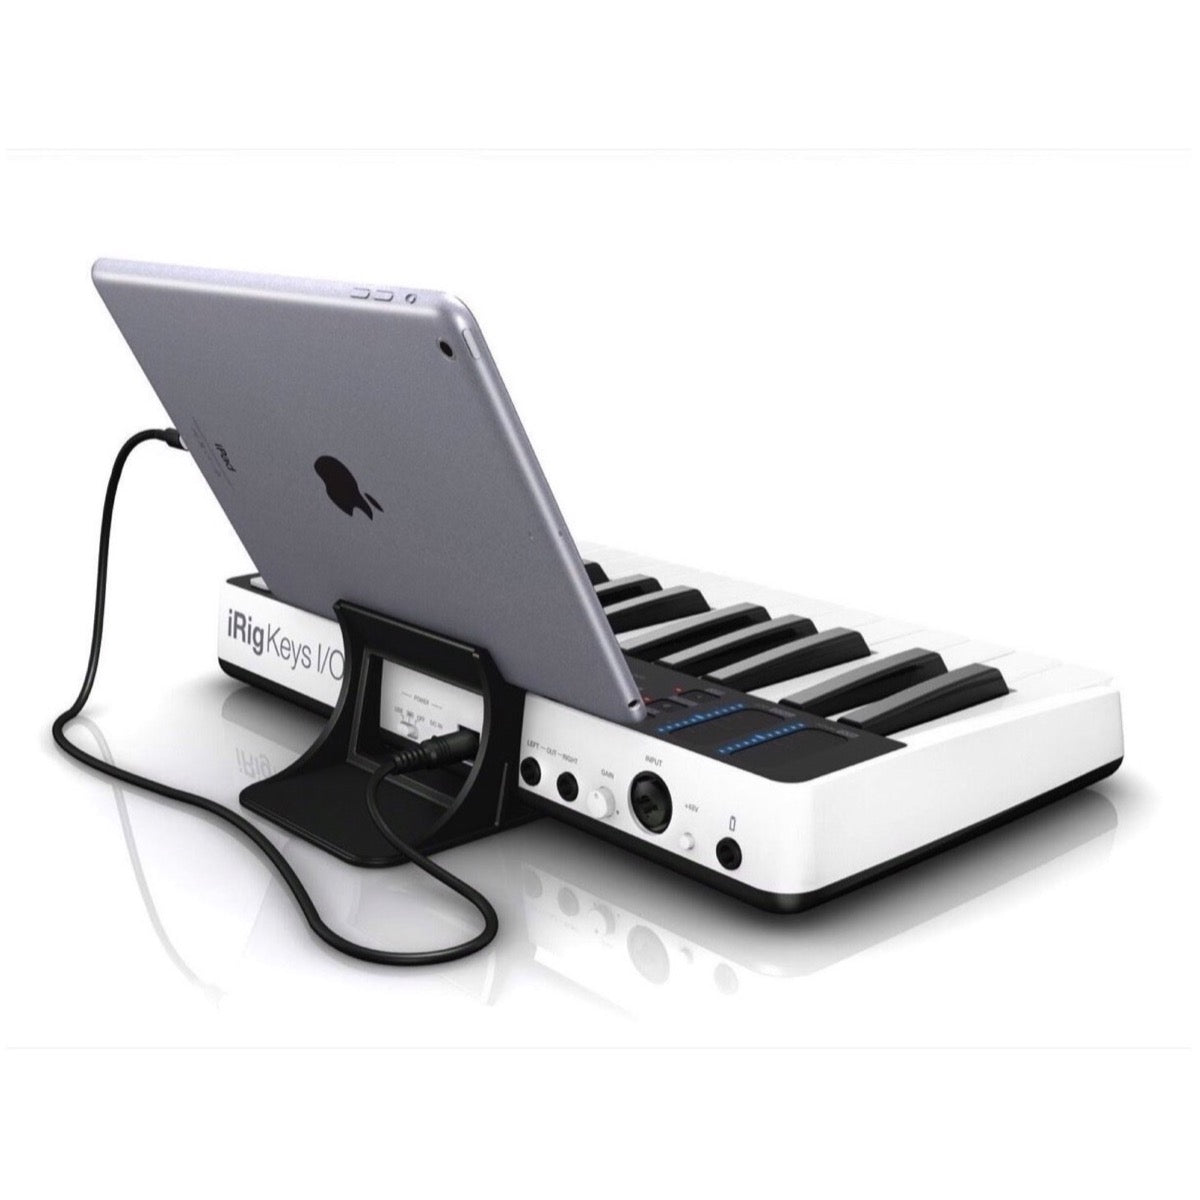 IK Multimedia iRig Keys I/O 25 Keyboard Controller